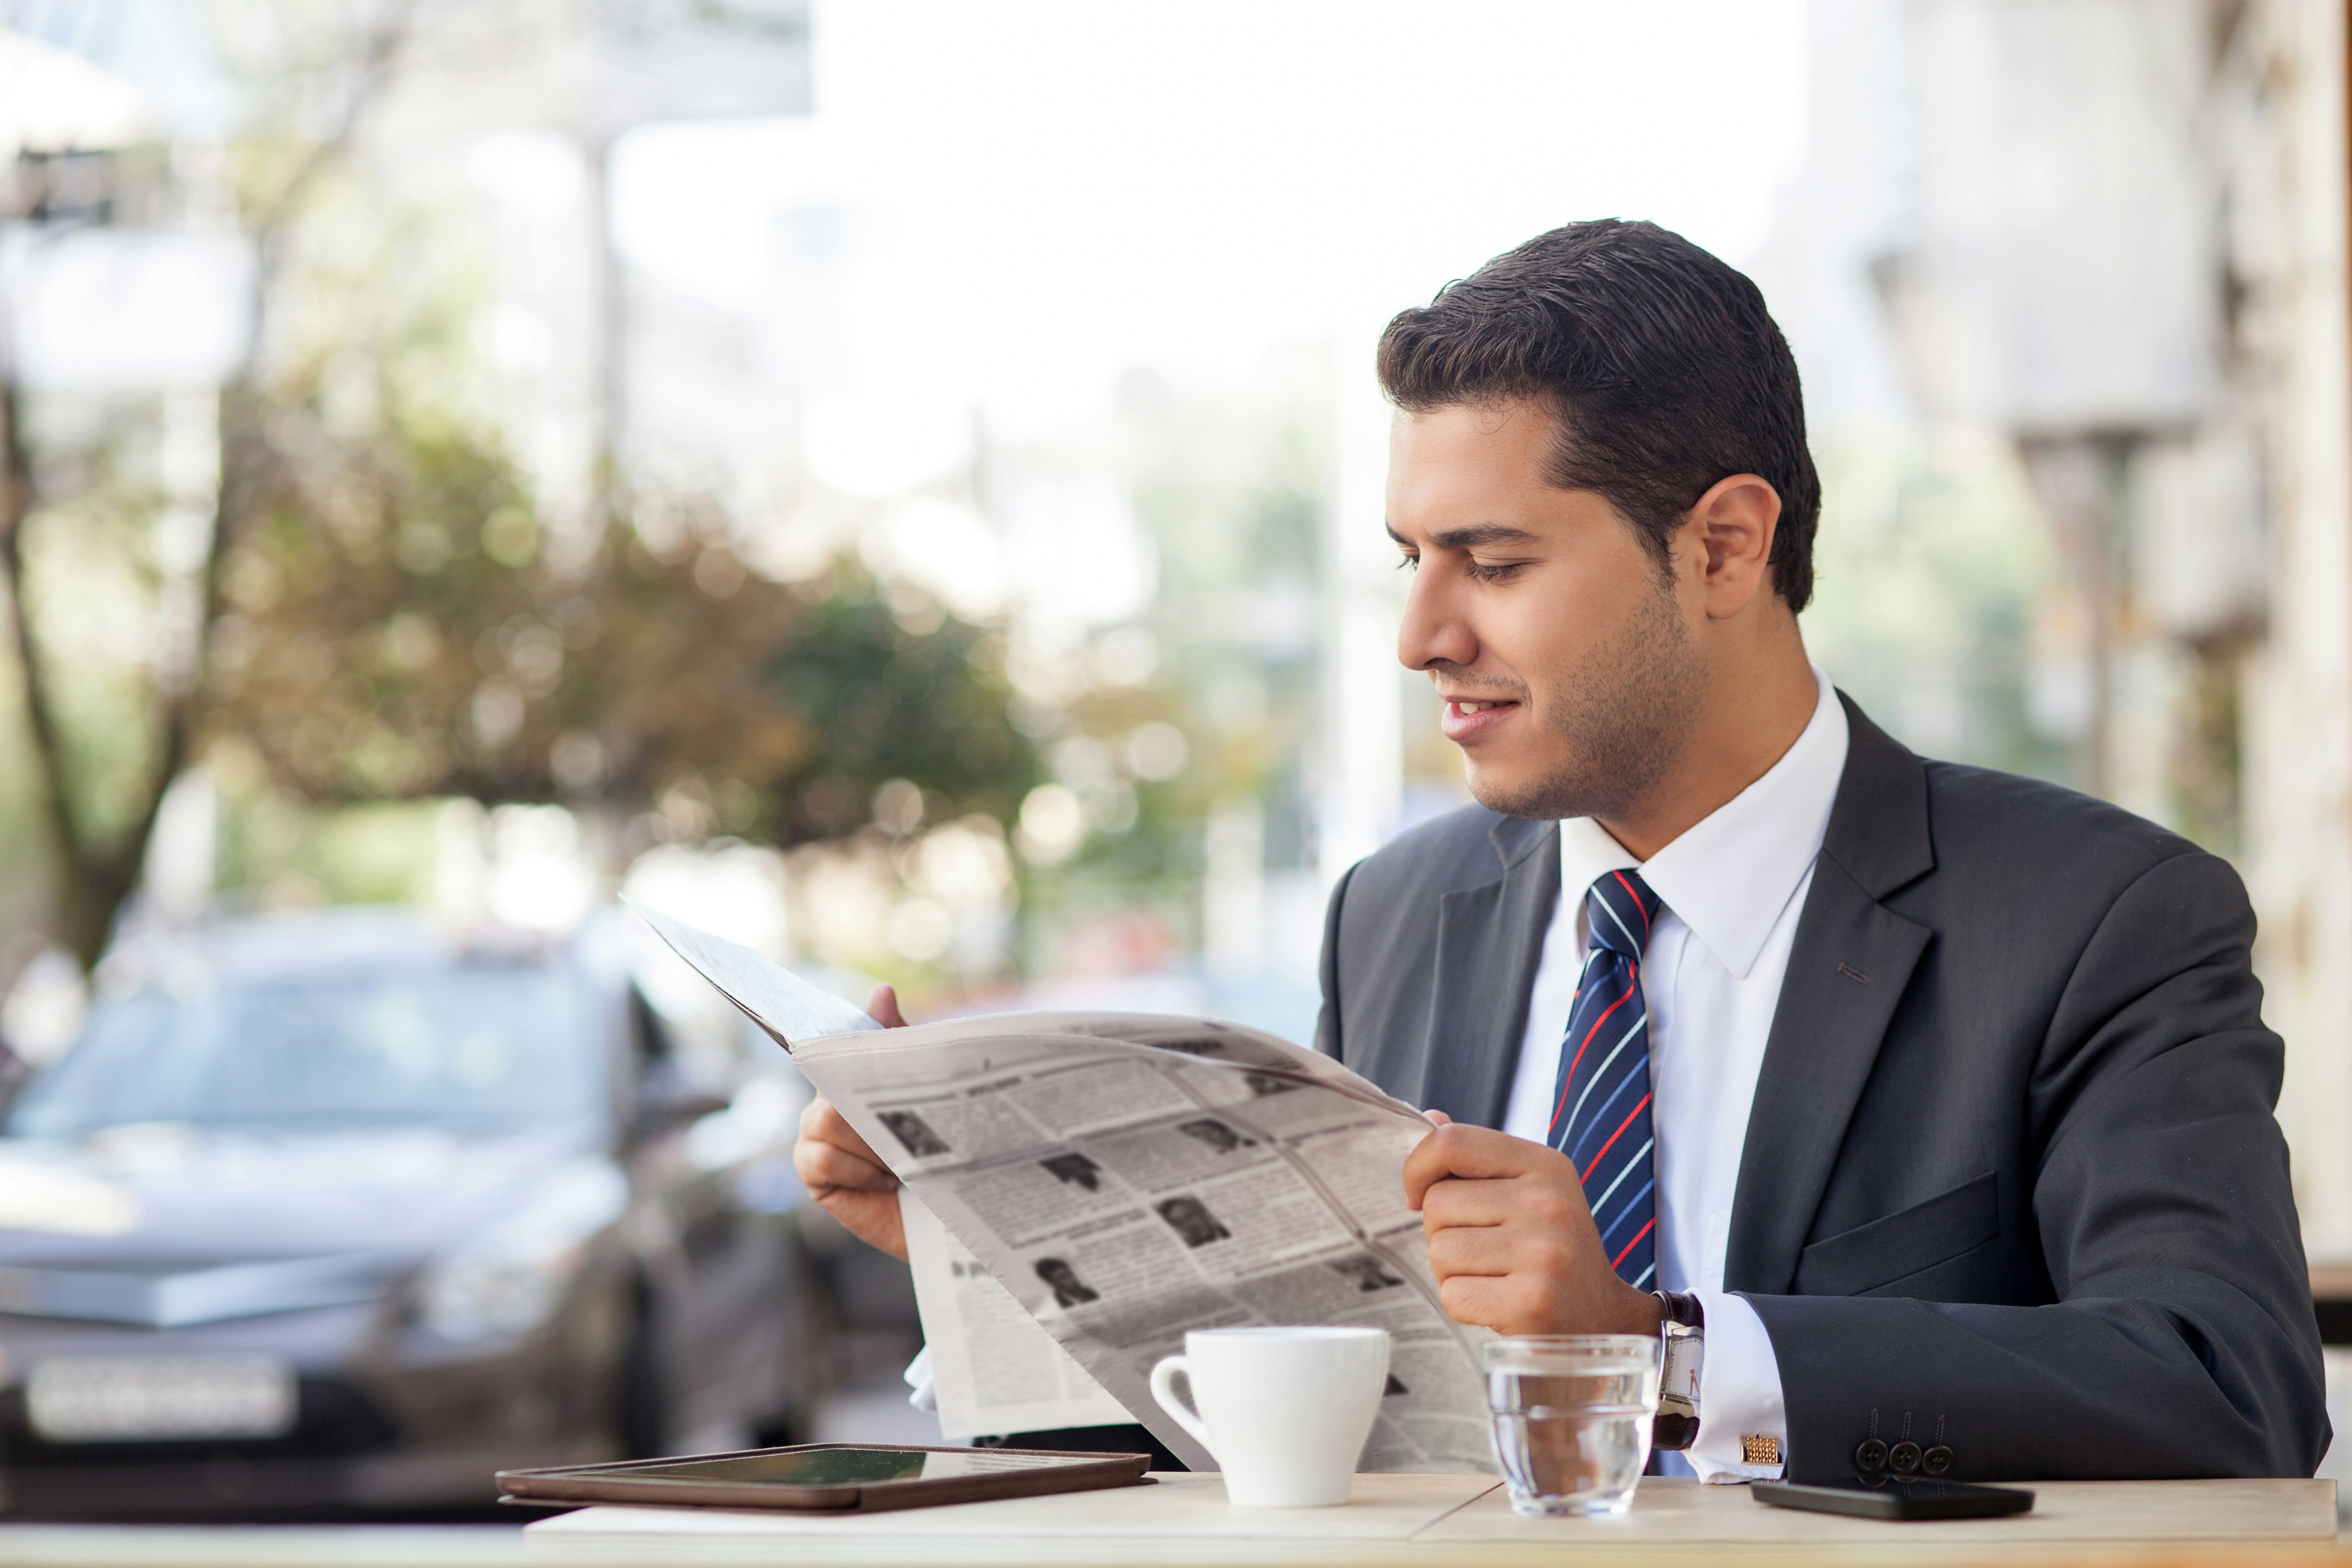 Digital detox man in suit reading a newspaper